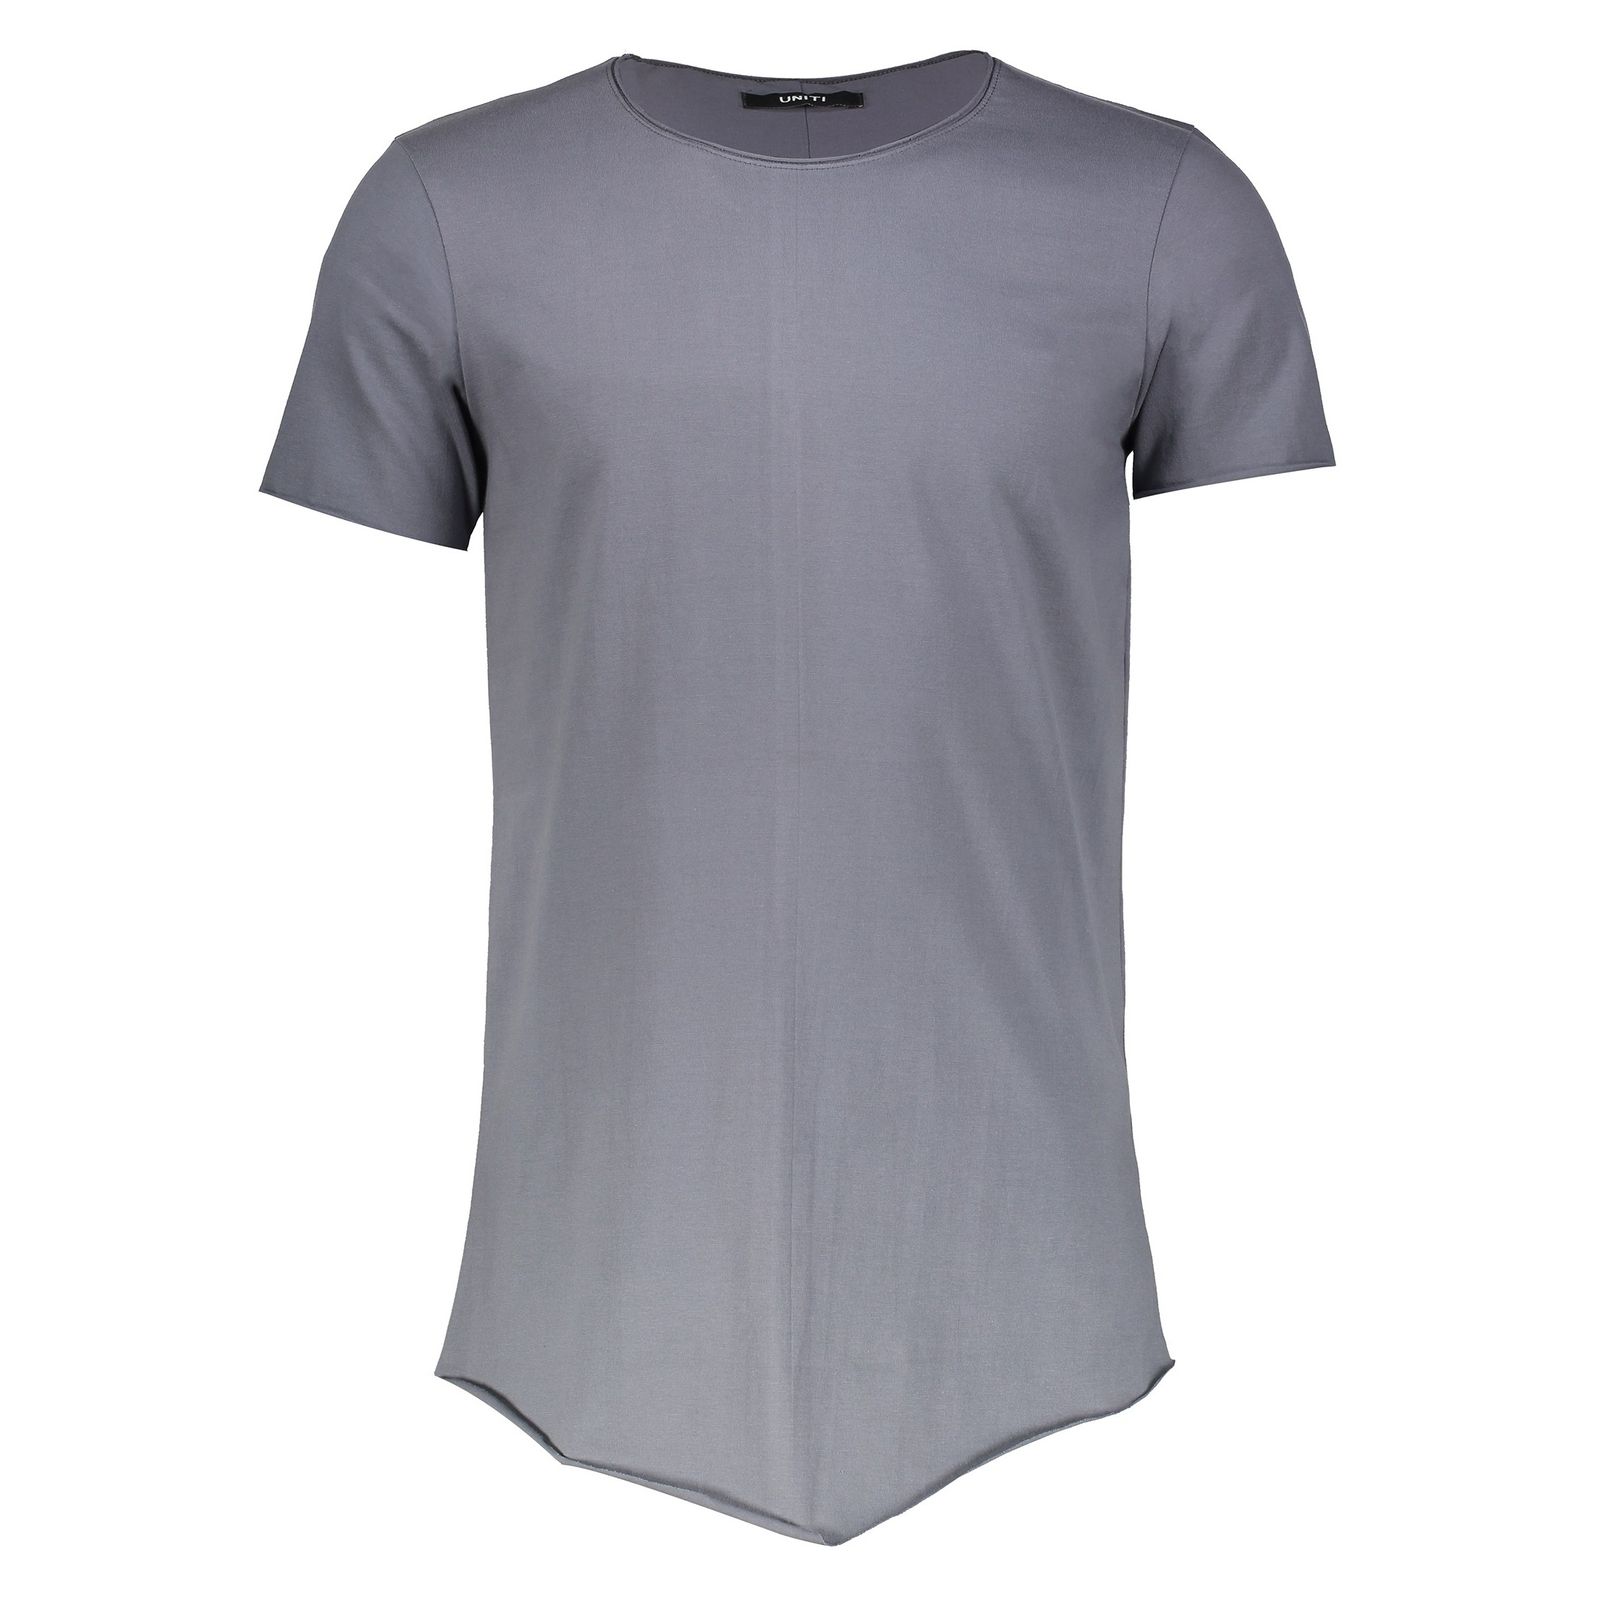 تی شرت نخی یقه گرد مردانه FM - یونیتی - طوسي - 1